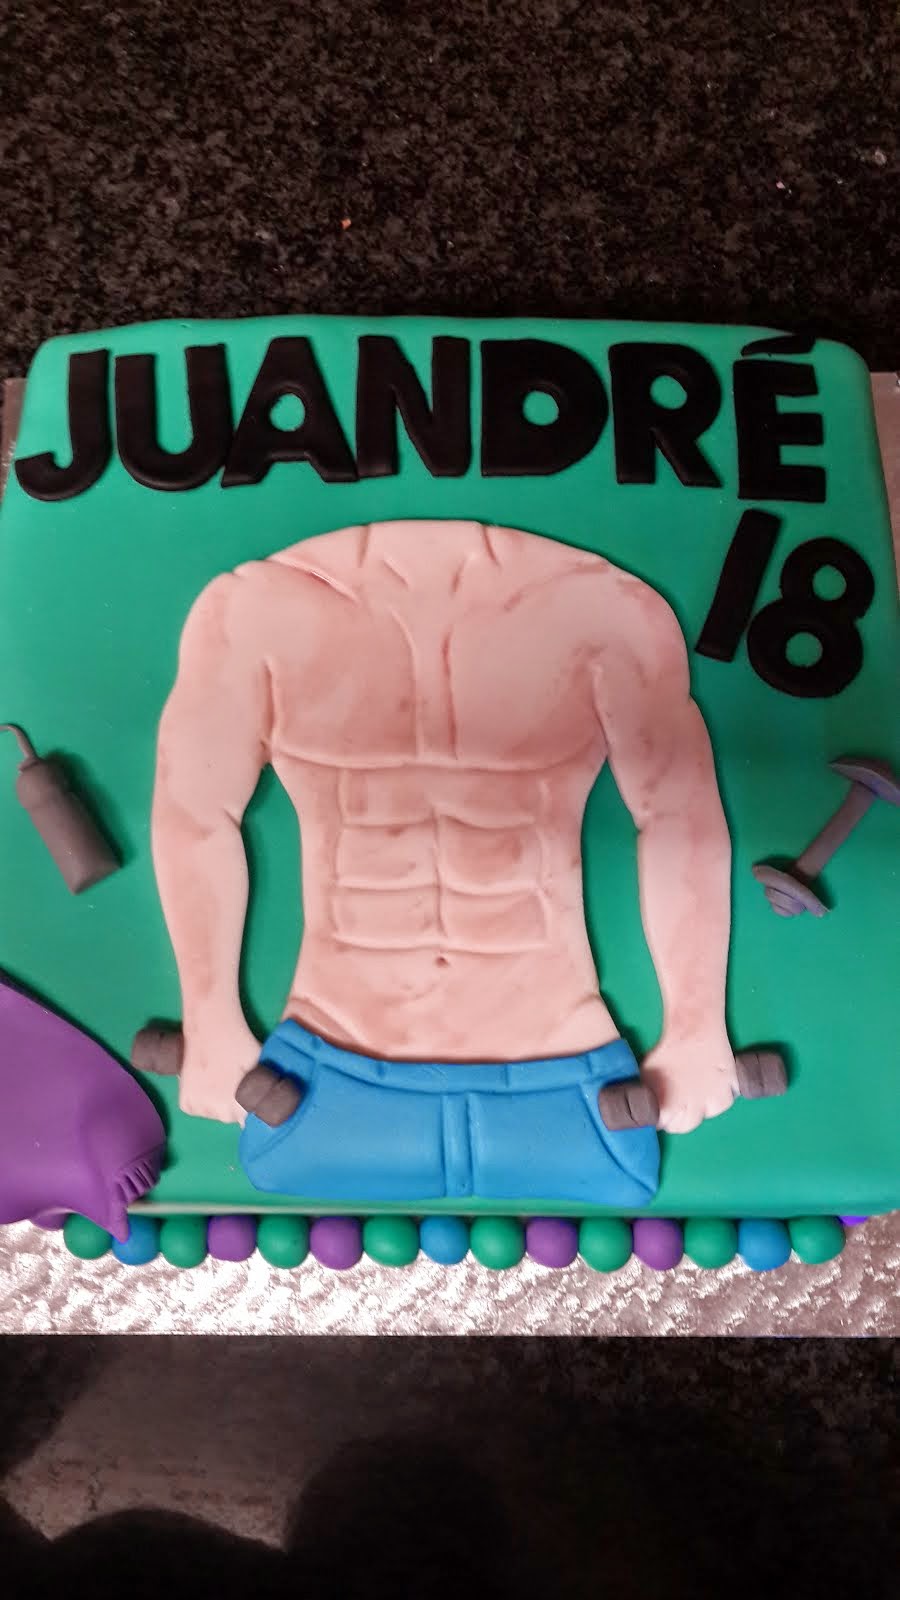 Juandre's 18th Birthday cake